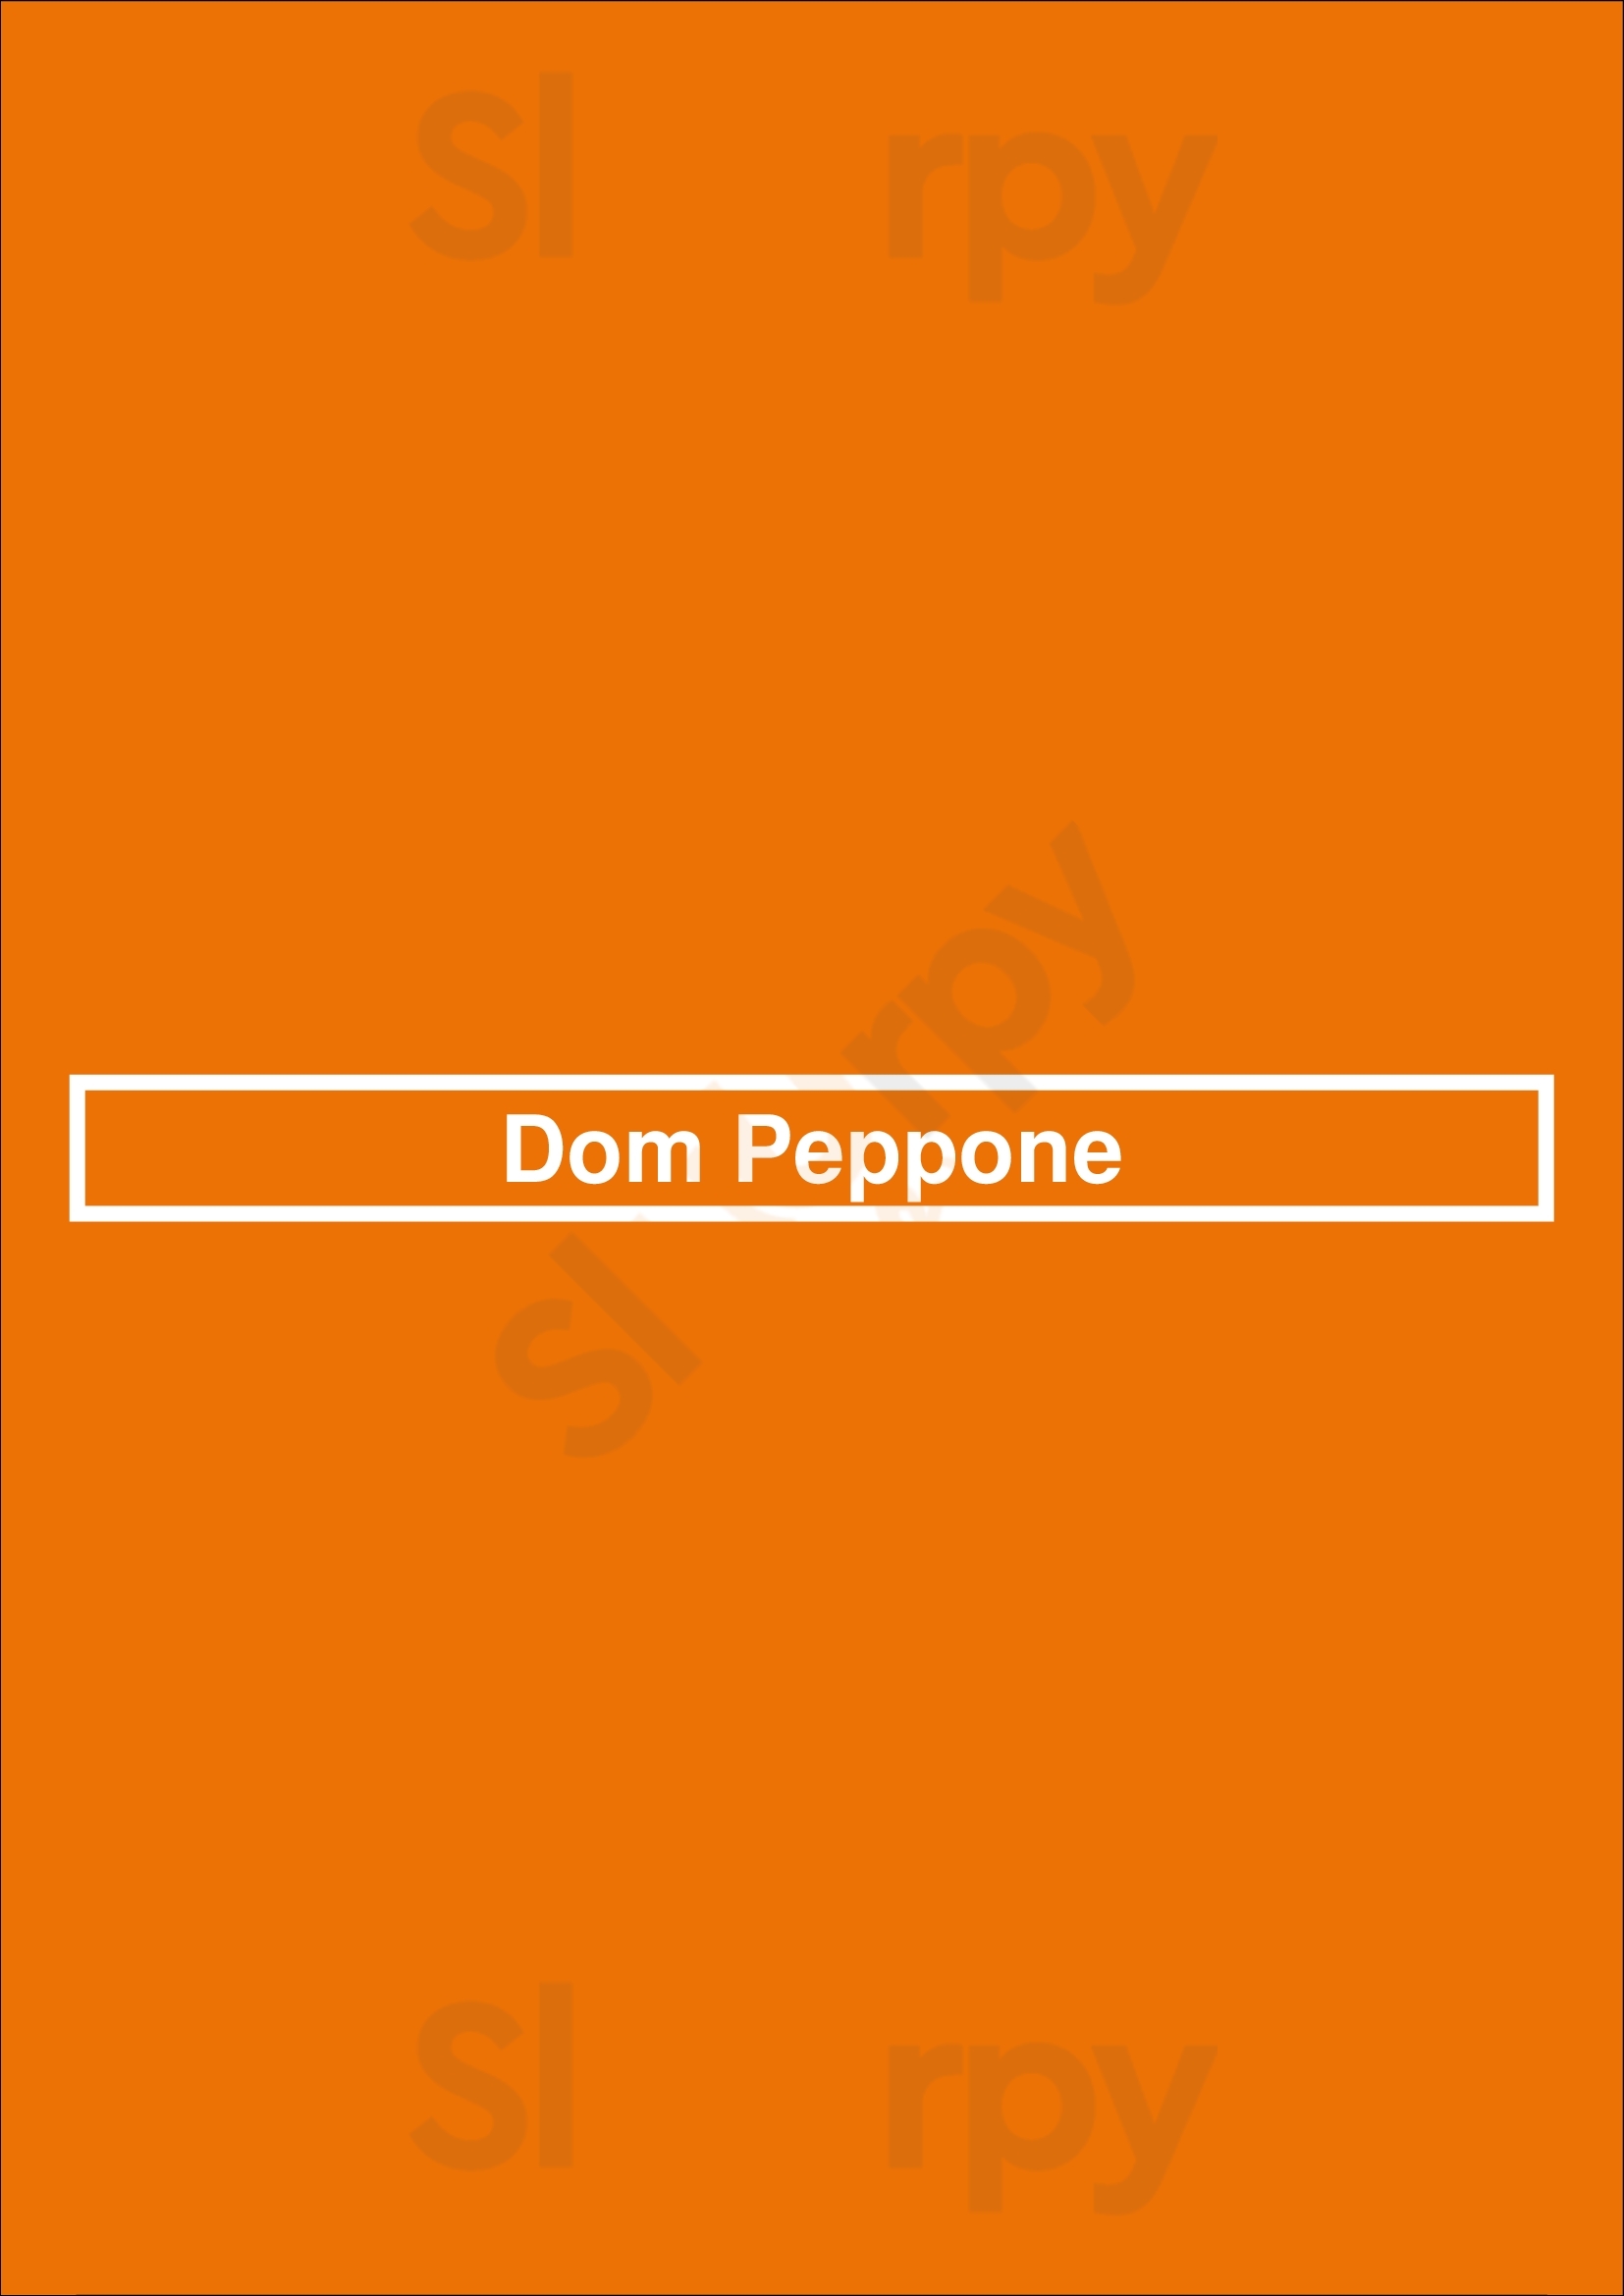 Dom Peppone Setúbal Menu - 1